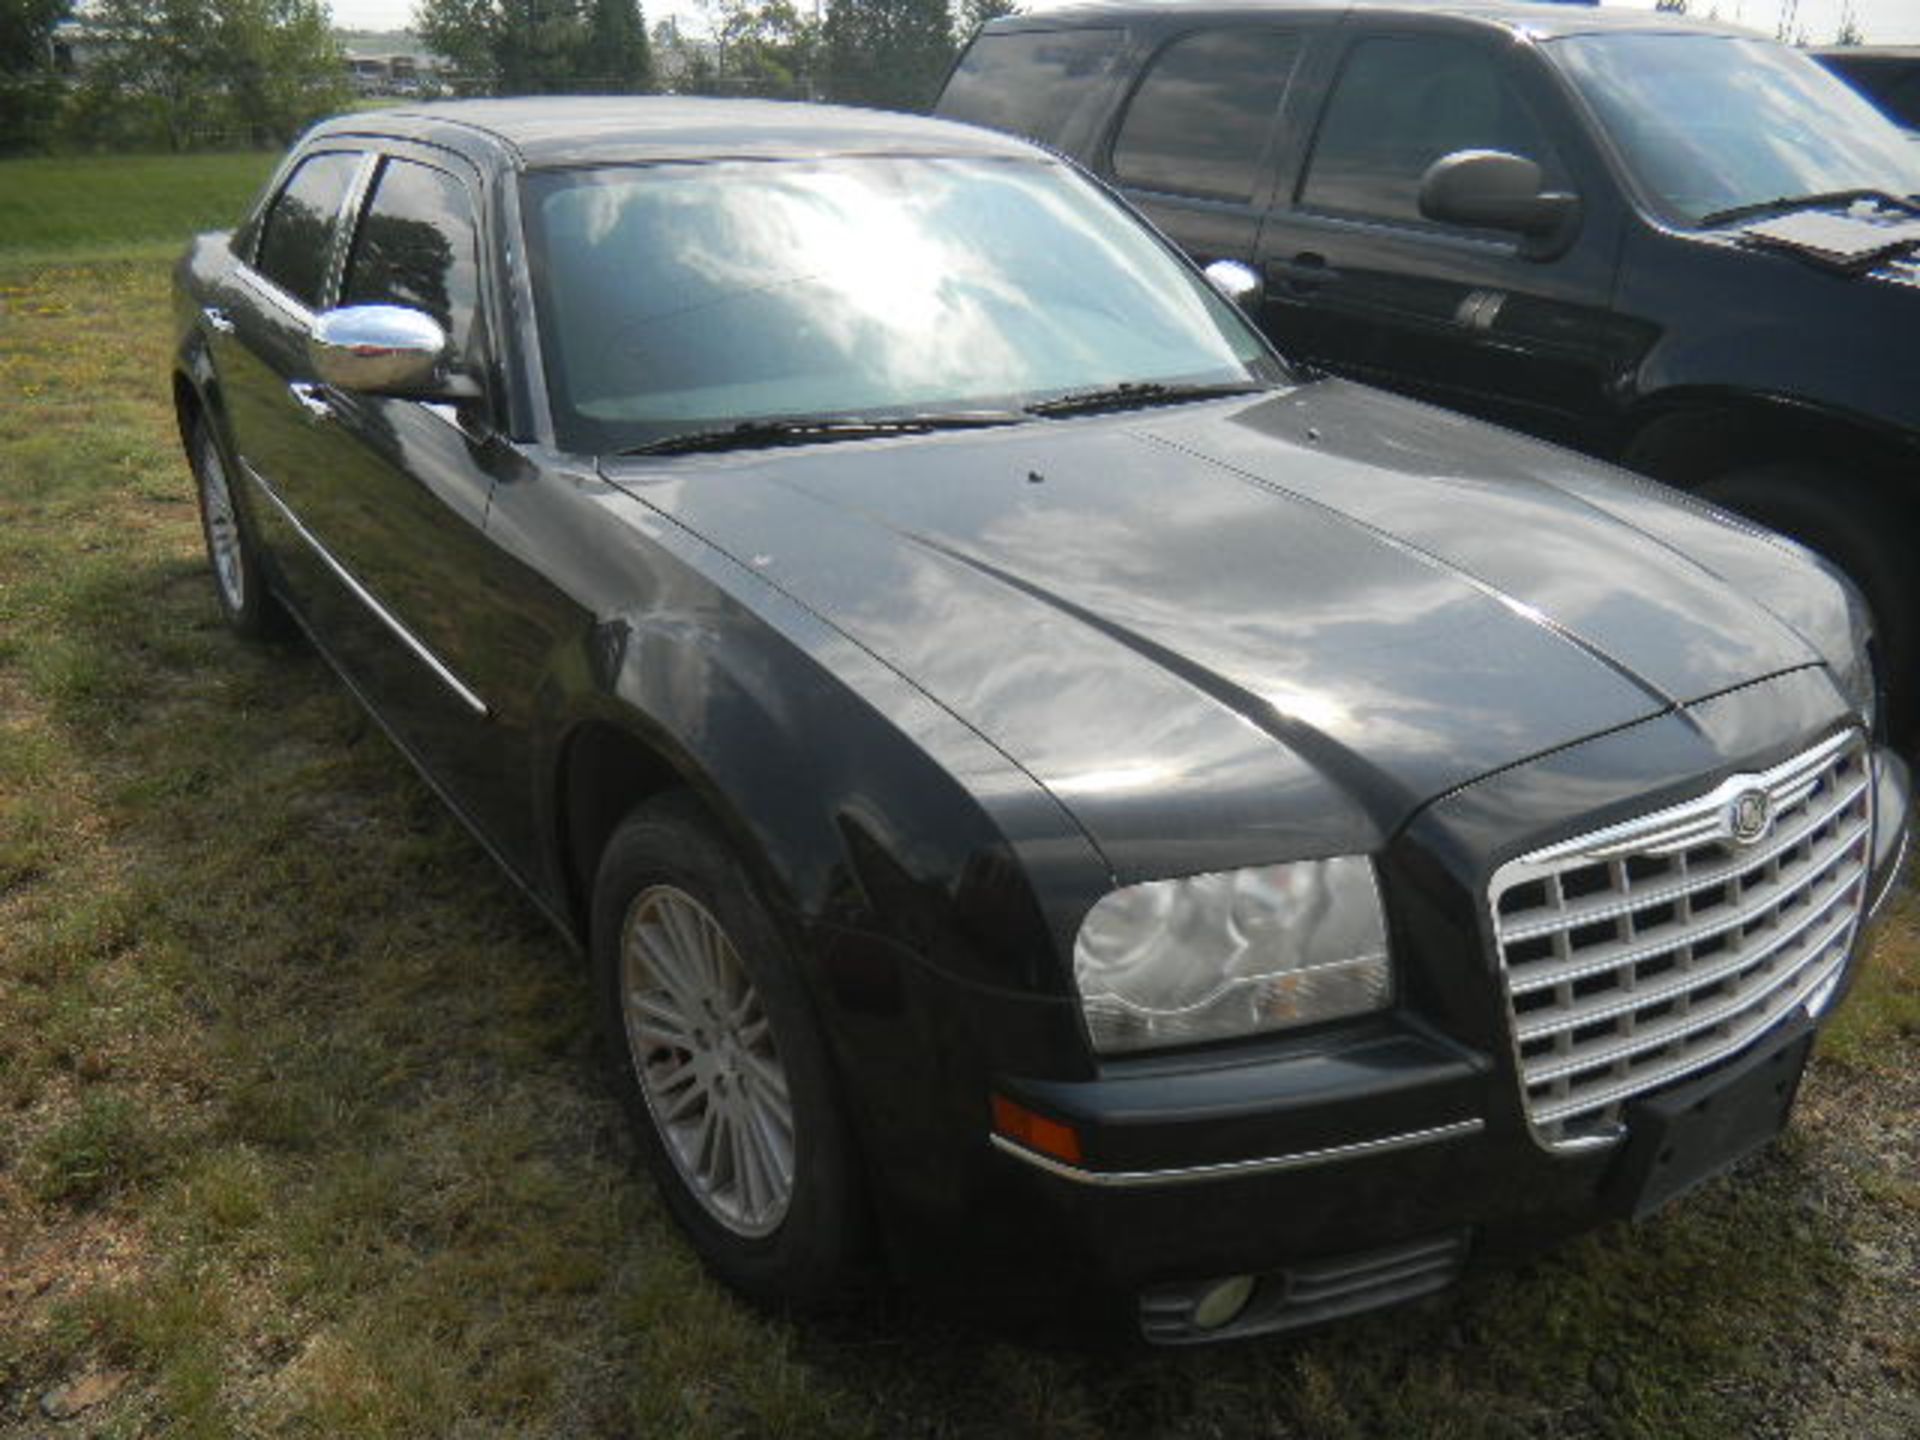 2007 Chrysler 300 (Black) - Asset I.D. #277 - Last of Vin (H102201) - Image 2 of 5